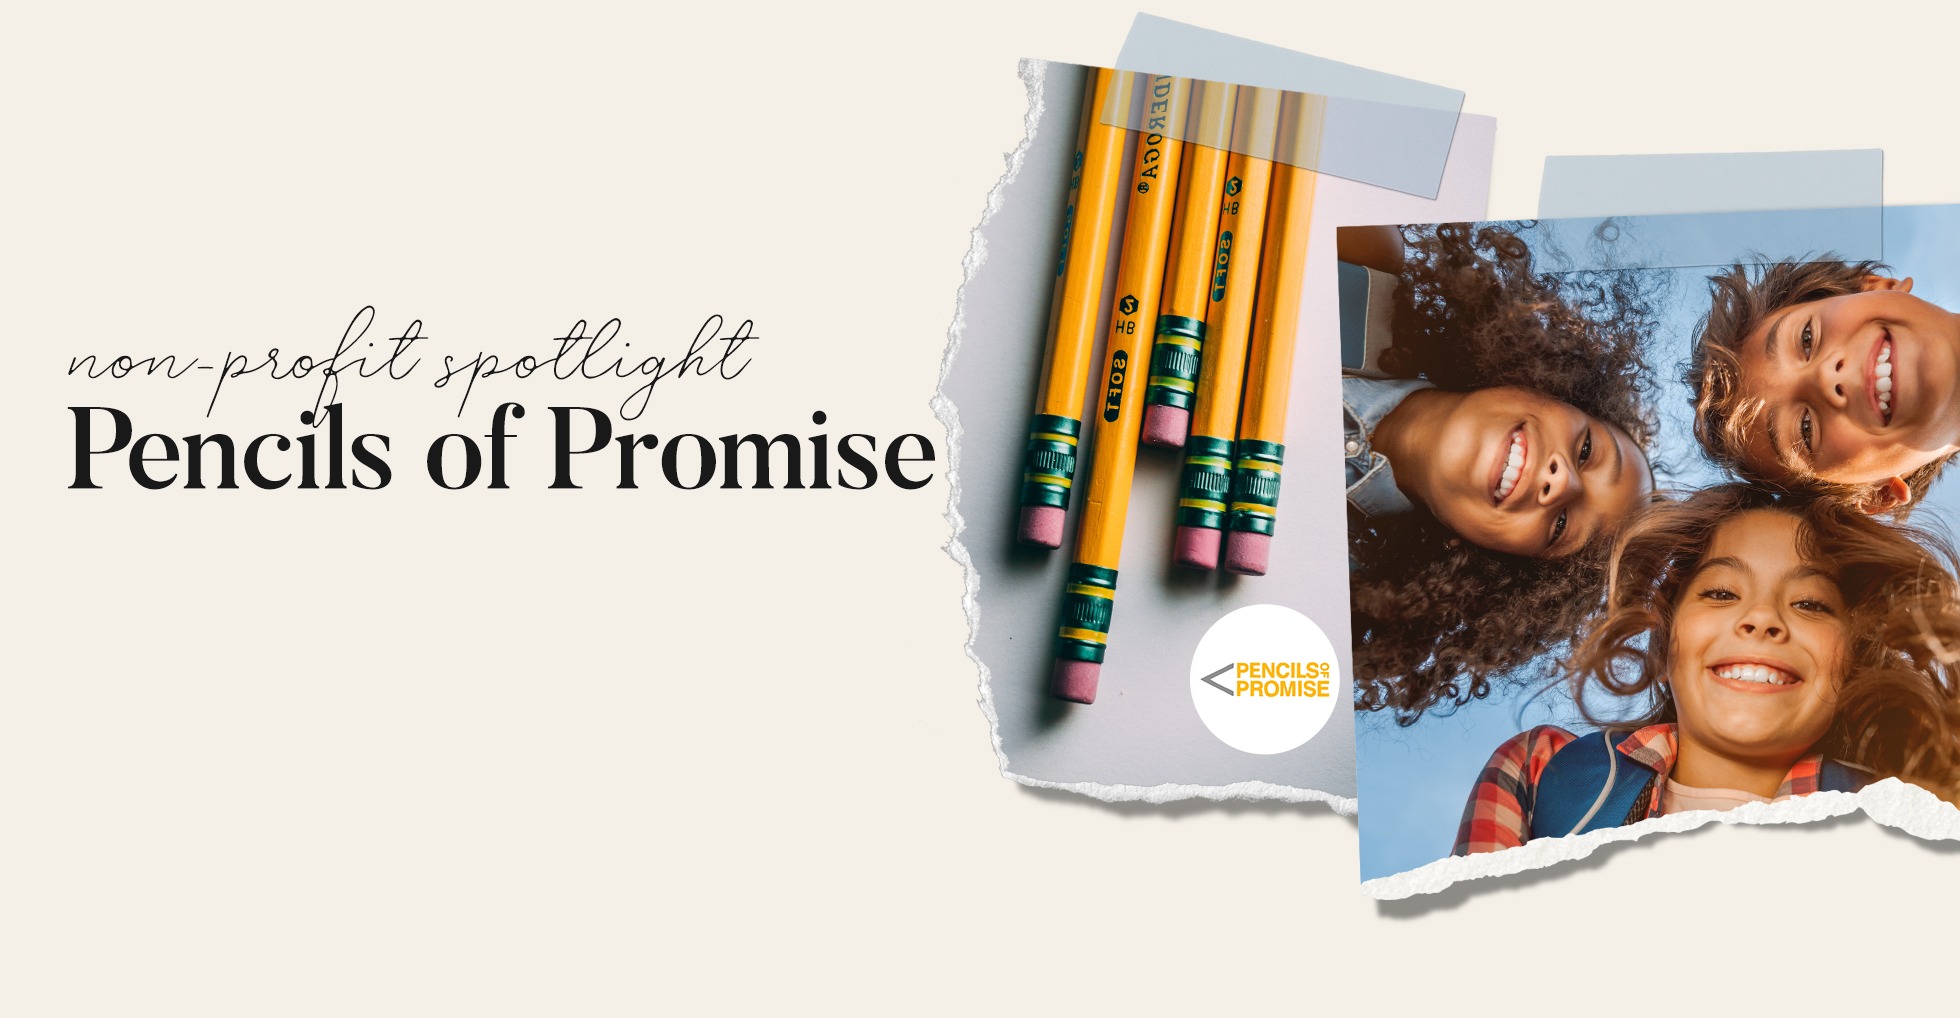 Pencils of Promise: Nonprofit Spotlight